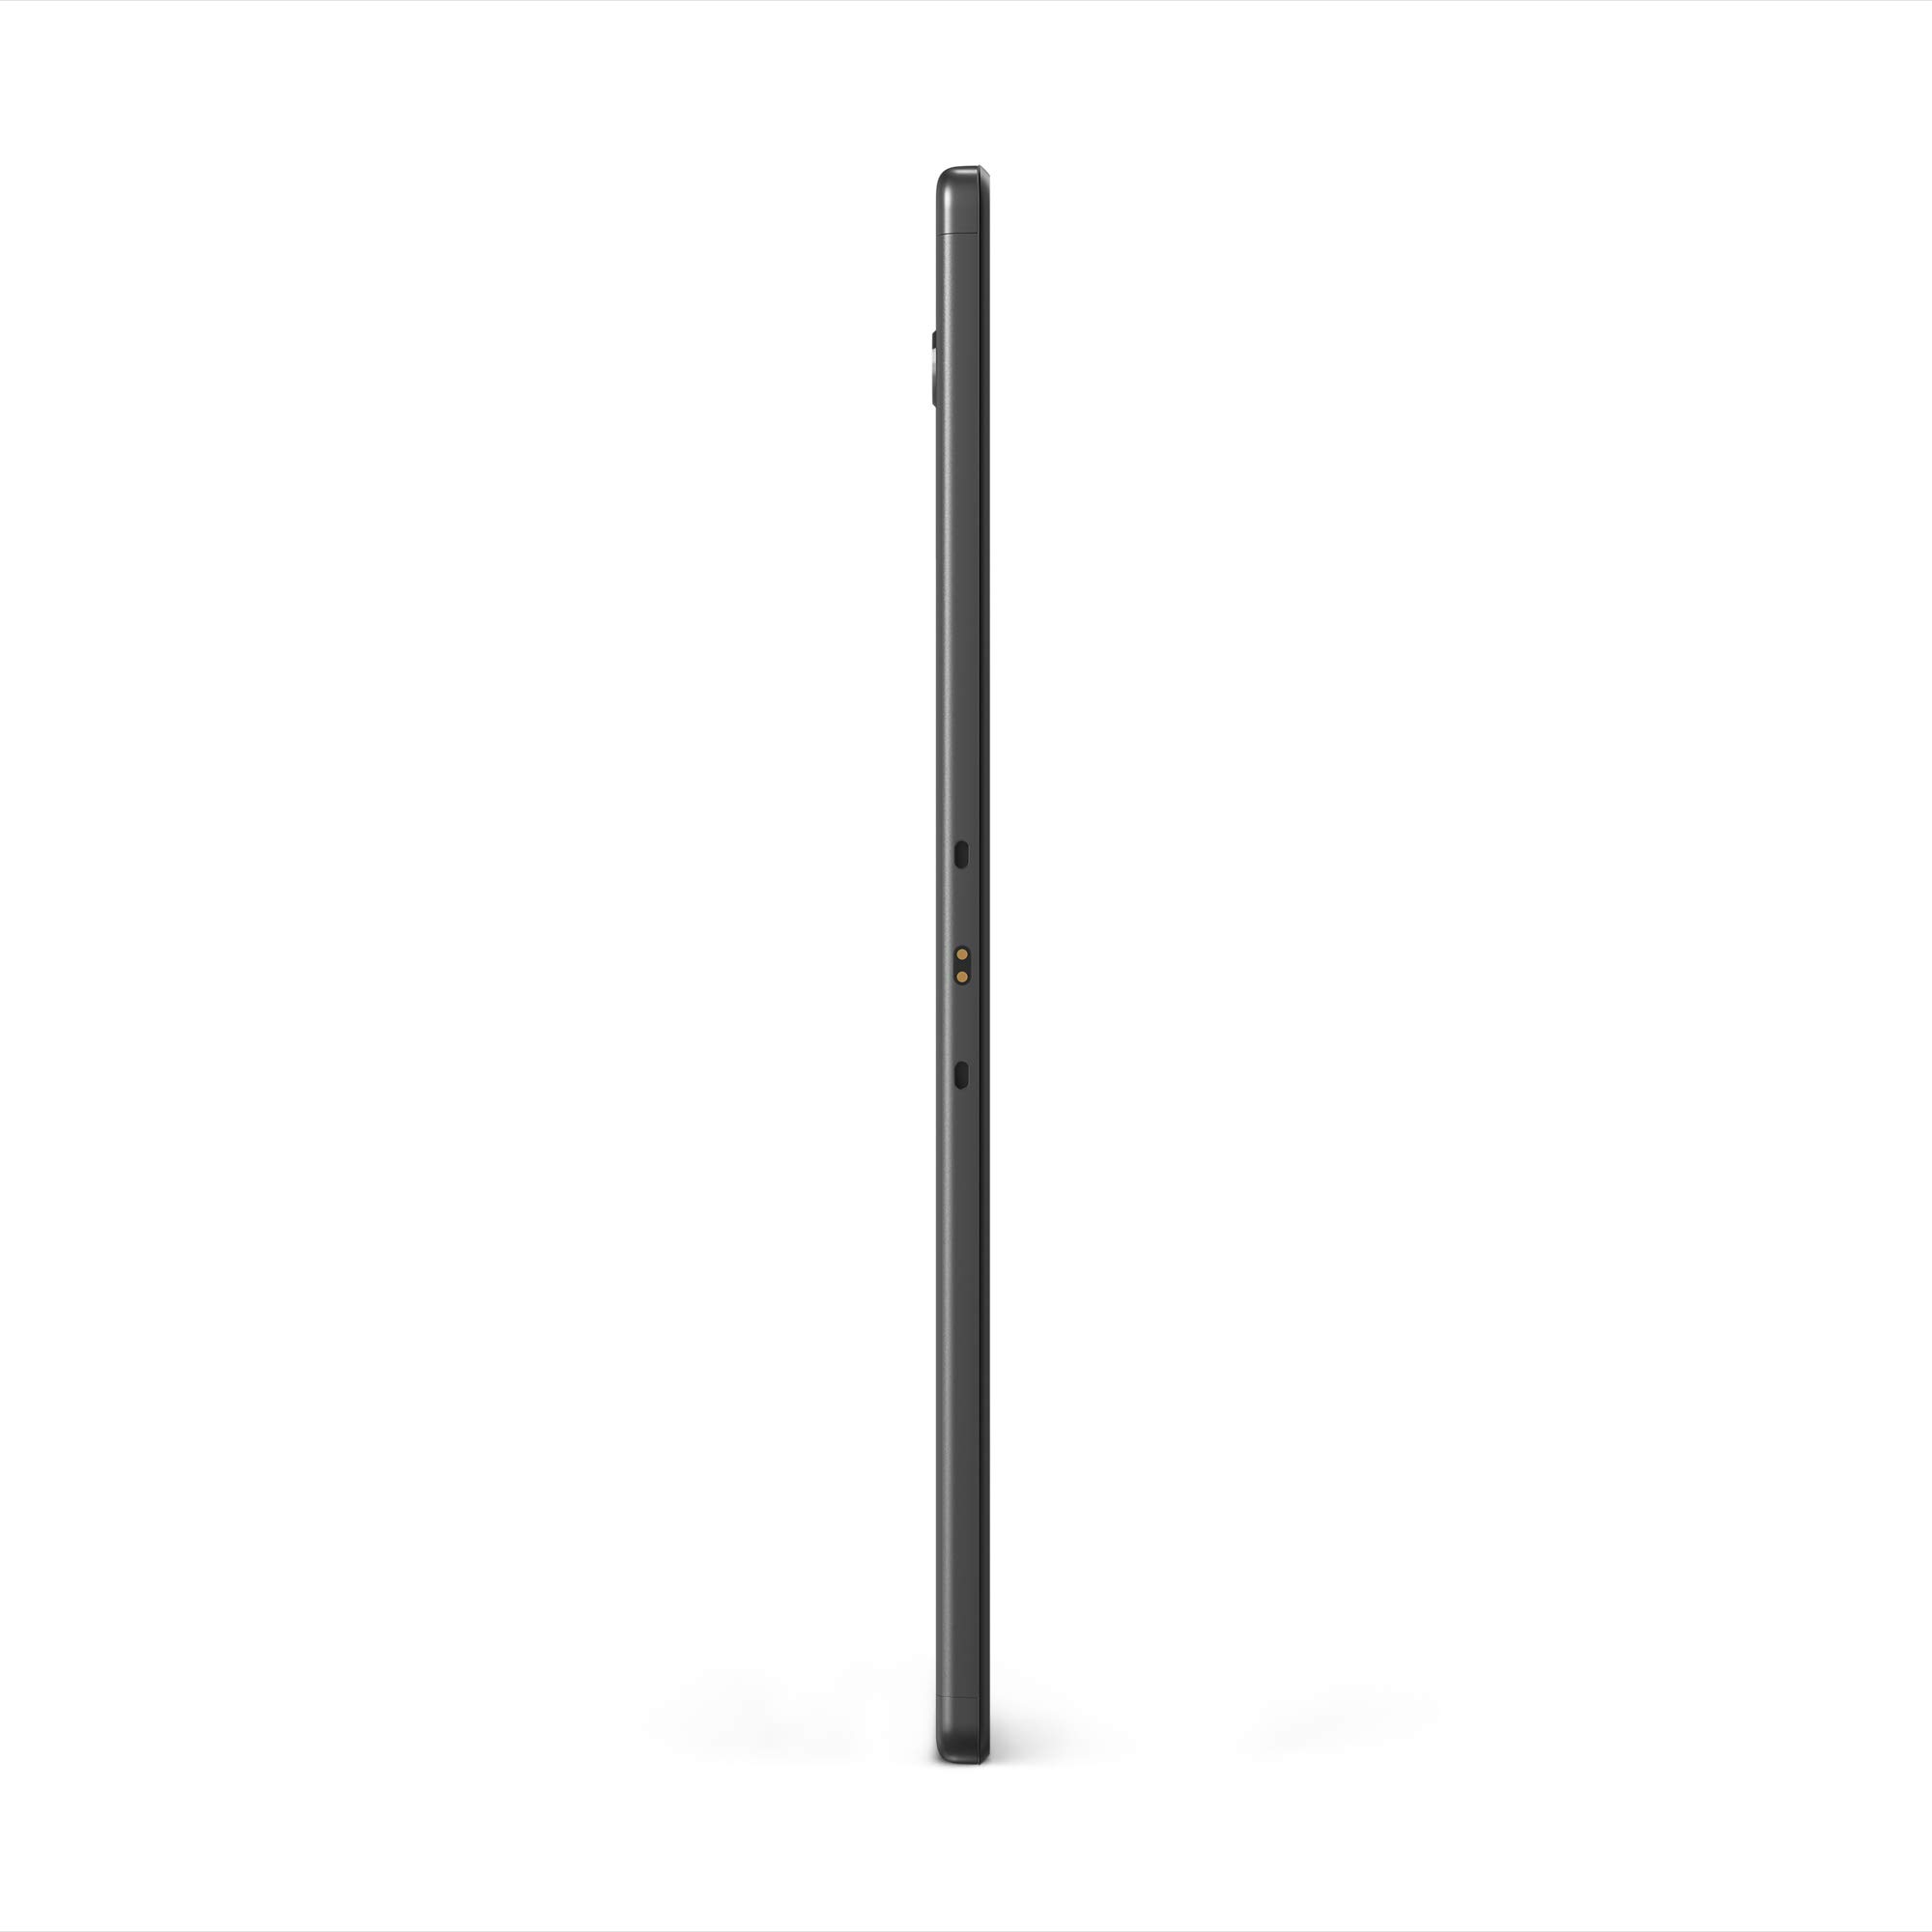 Lenovo Tab M10 Plus, FHD Android Tablet, Octa-Core Processor, 64GB Storage, 4GB RAM, Iron Grey